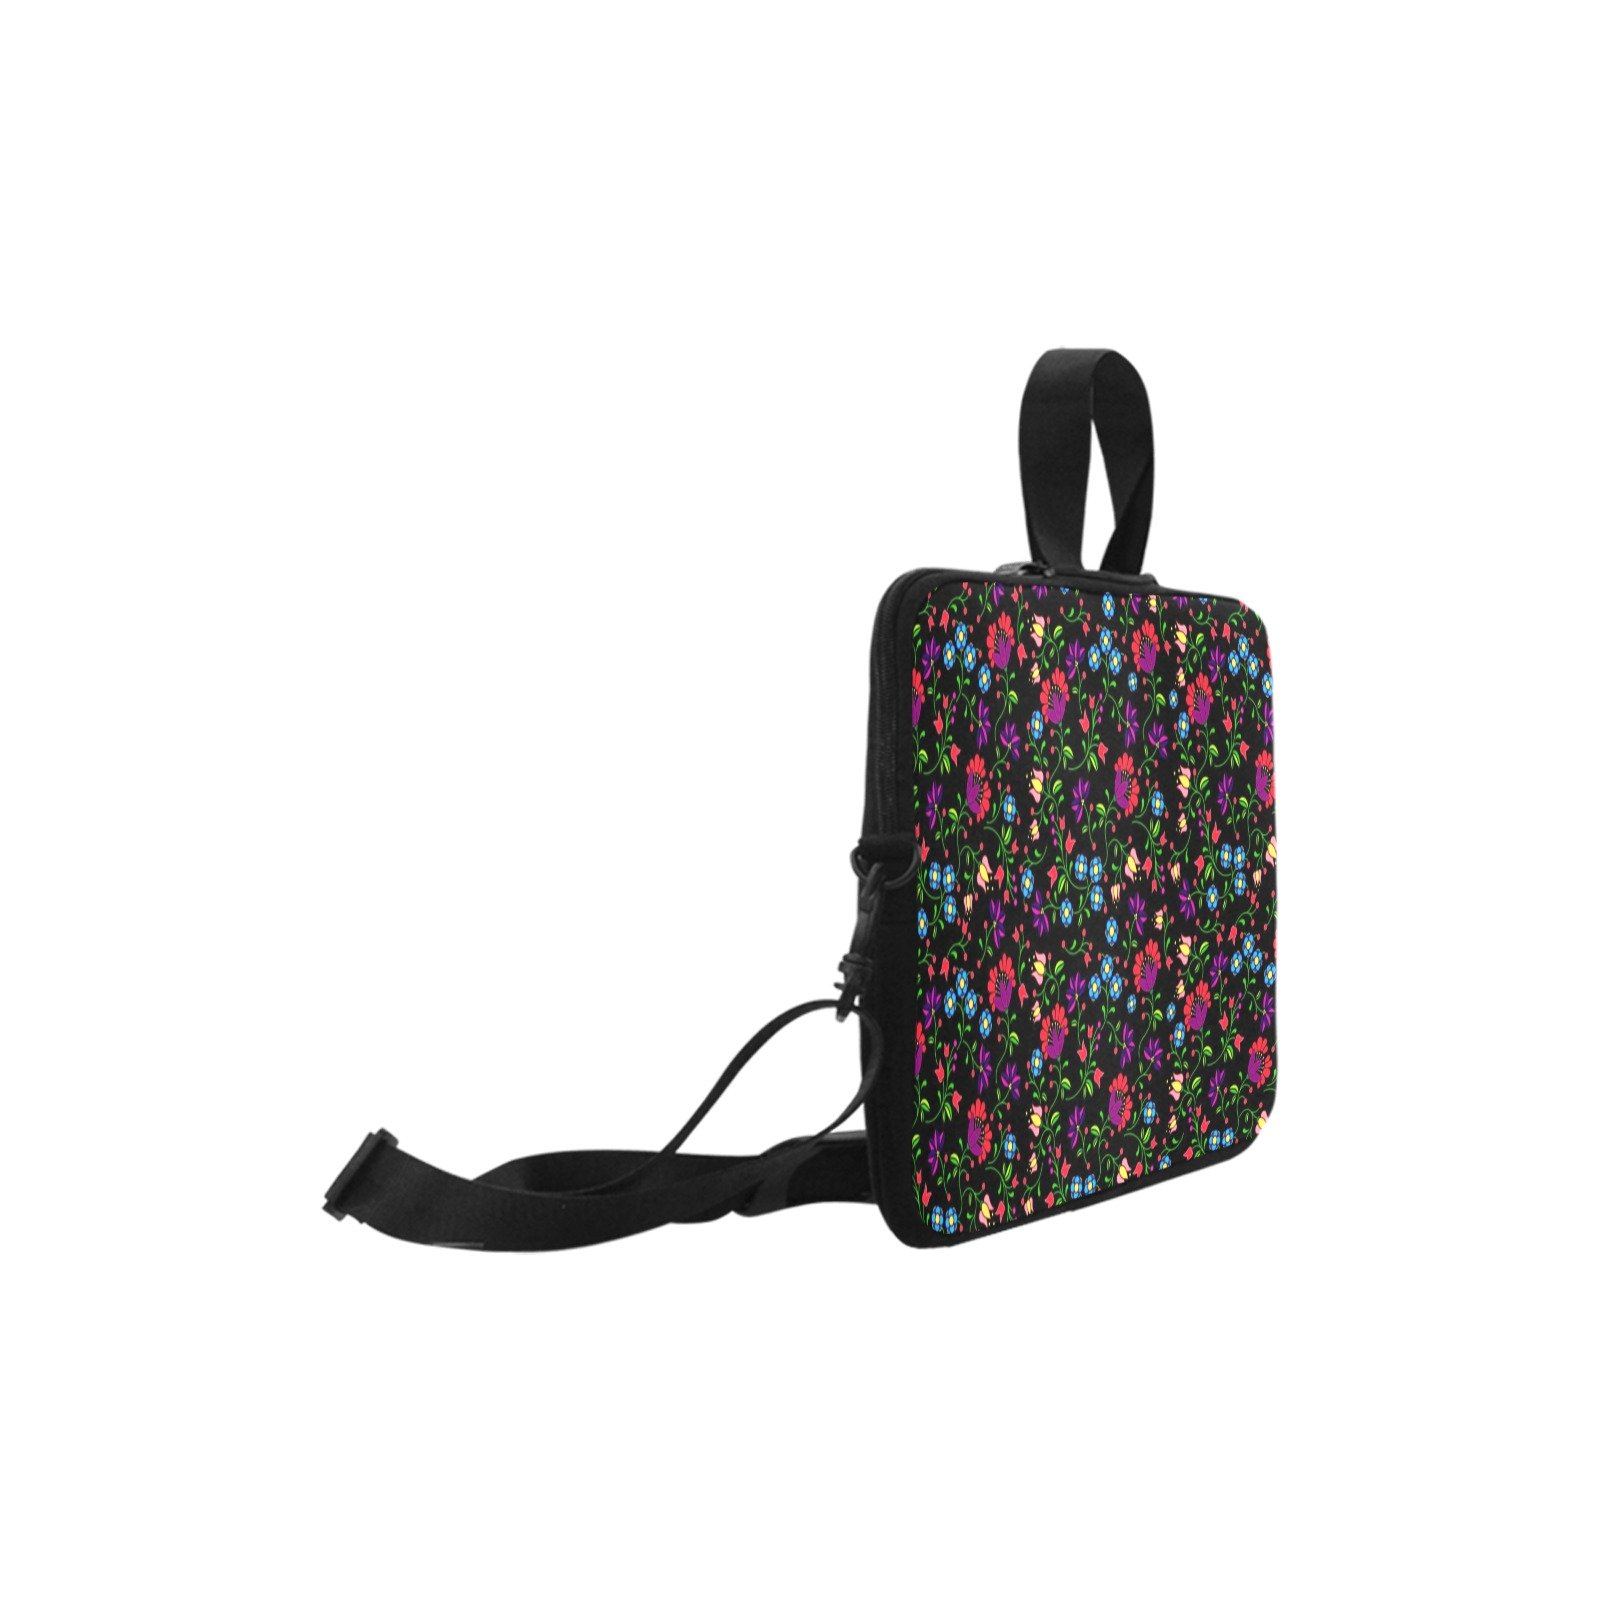 Fleur Indigine Laptop Handbags 10" bag e-joyer 